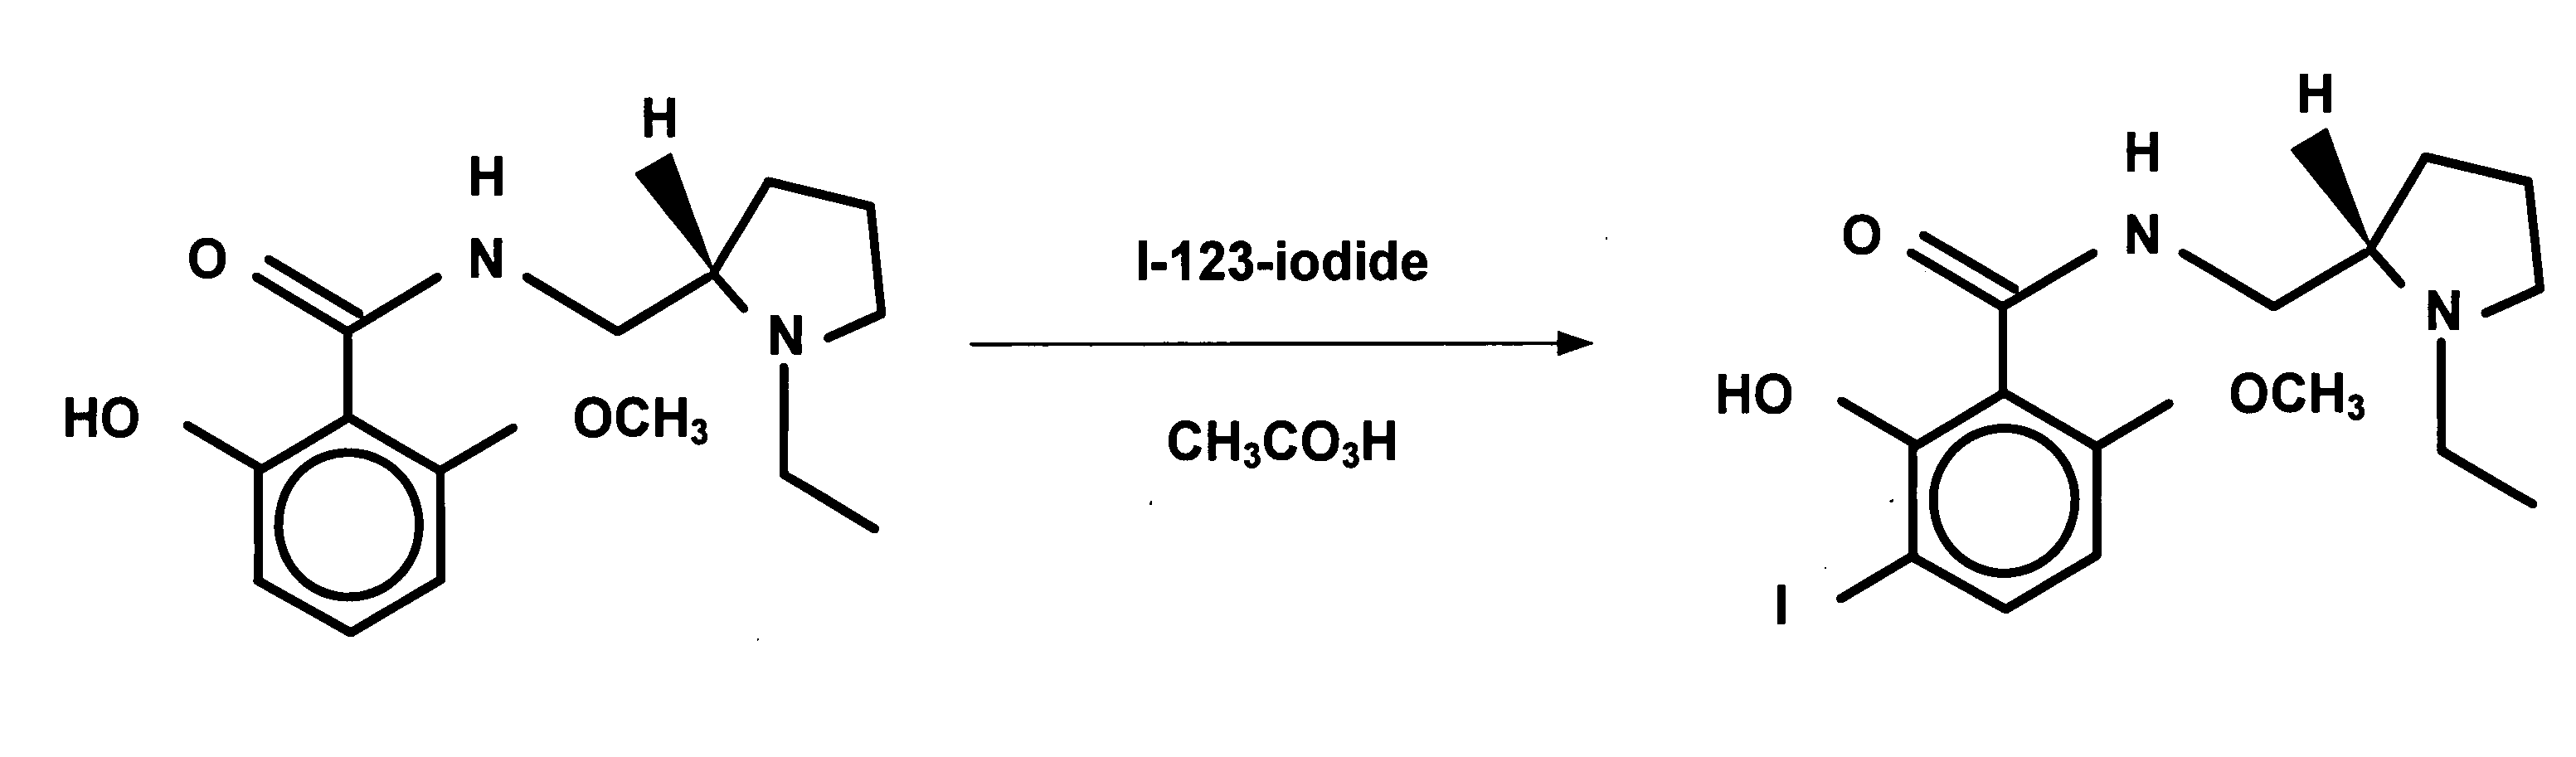 Method of obtaining BZM purity, quantity of [123I]IBZM labeled ligand and quantity of BZM free ligand